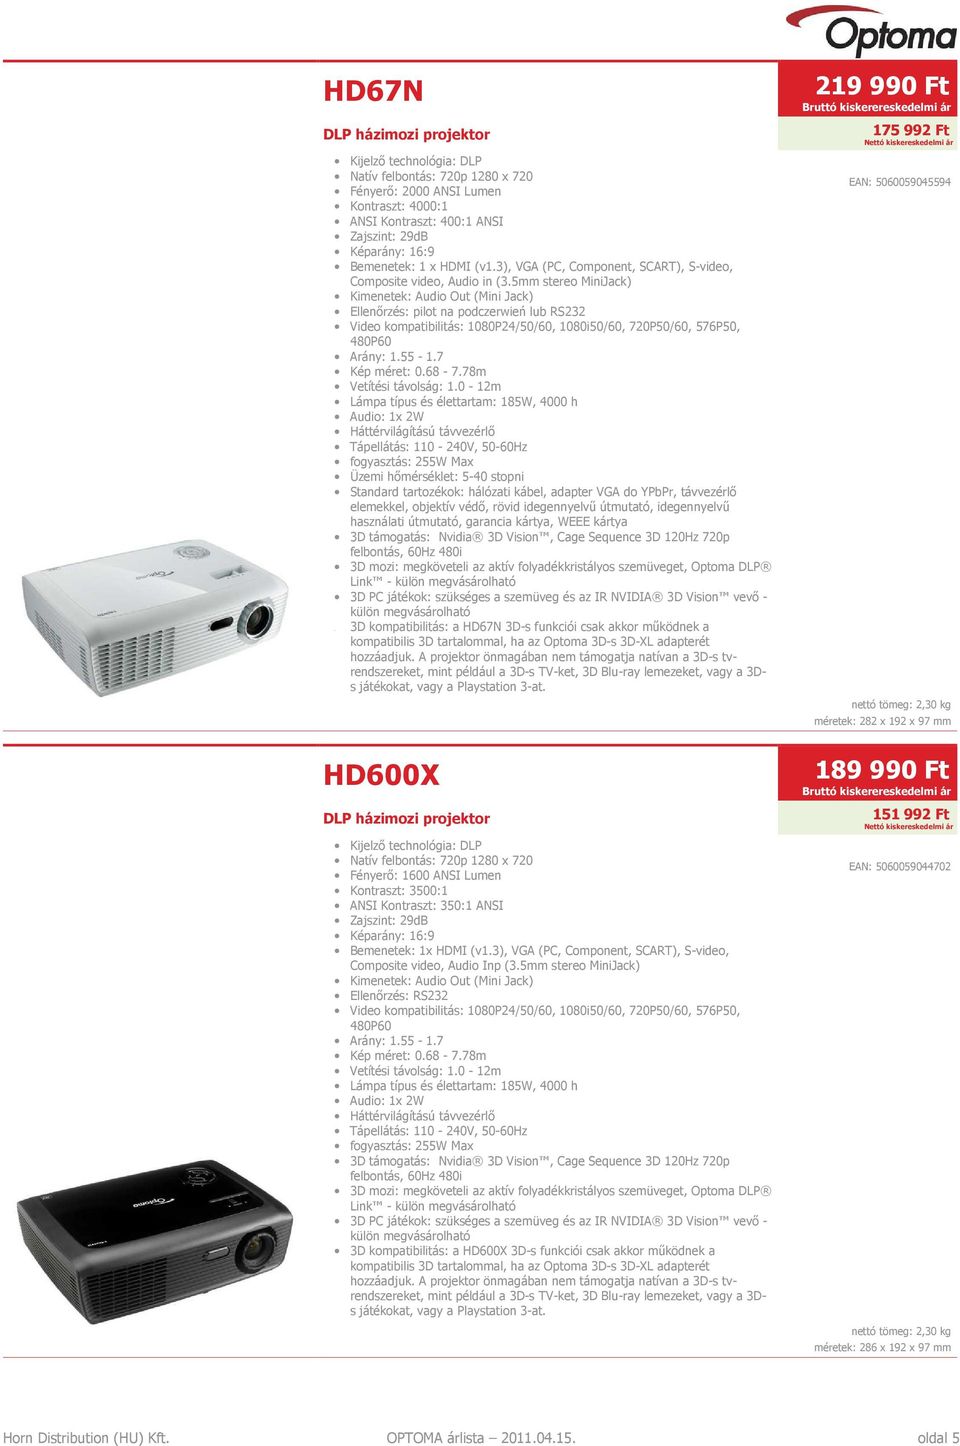 5mm stereo MiniJack) Kimenetek: Audio Out (Mini Jack) Ellenőrzés: pilot na podczerwień lub RS232 Video kompatibilitás: 1080P24/50/60, 1080i50/60, 720P50/60, 576P50, 480P60 Arány: 1.55-1.